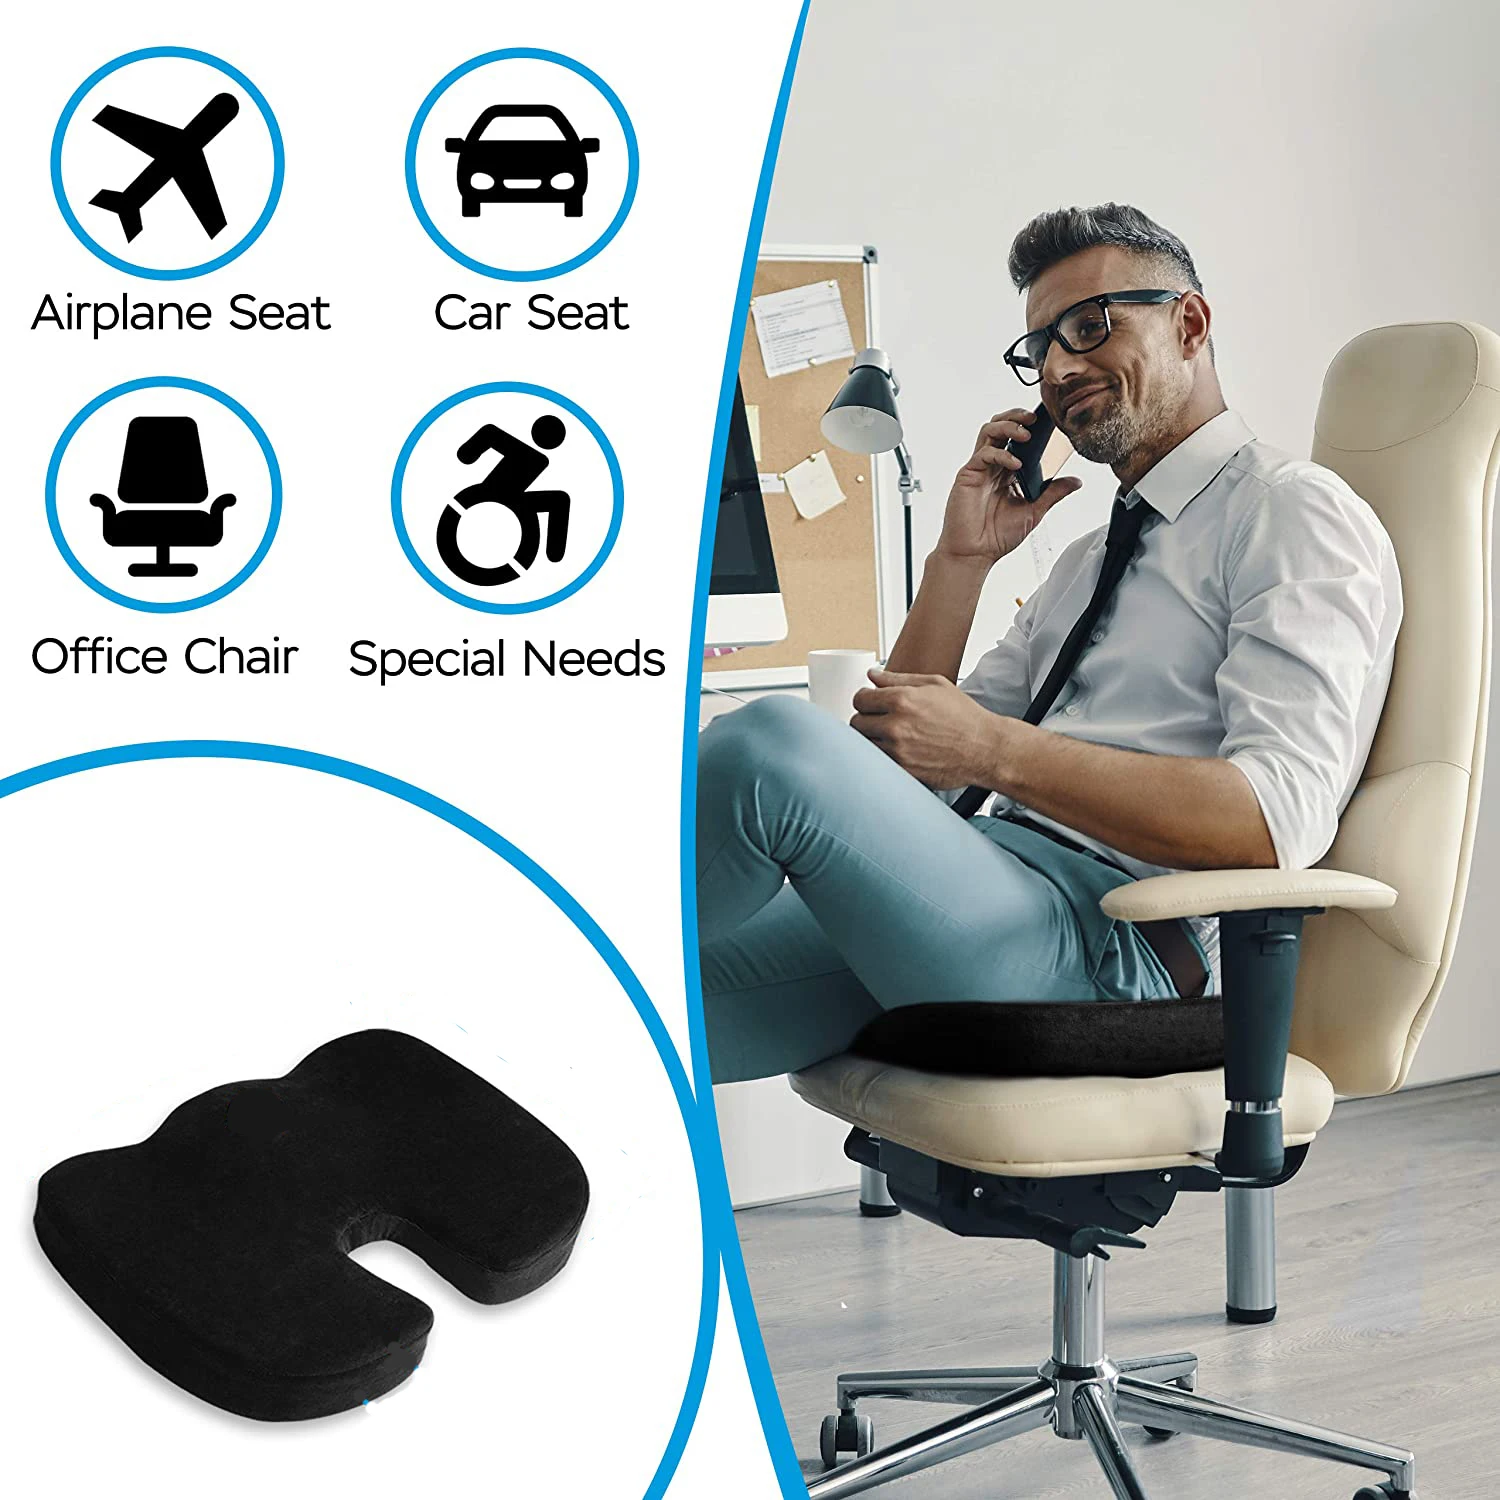 U-Shaped Memory Foam Seat Cushion for Back Pain Office Chair Car Desk Chairs  Tailbone Pain Relief Sofa Pillow Cushion - AliExpress